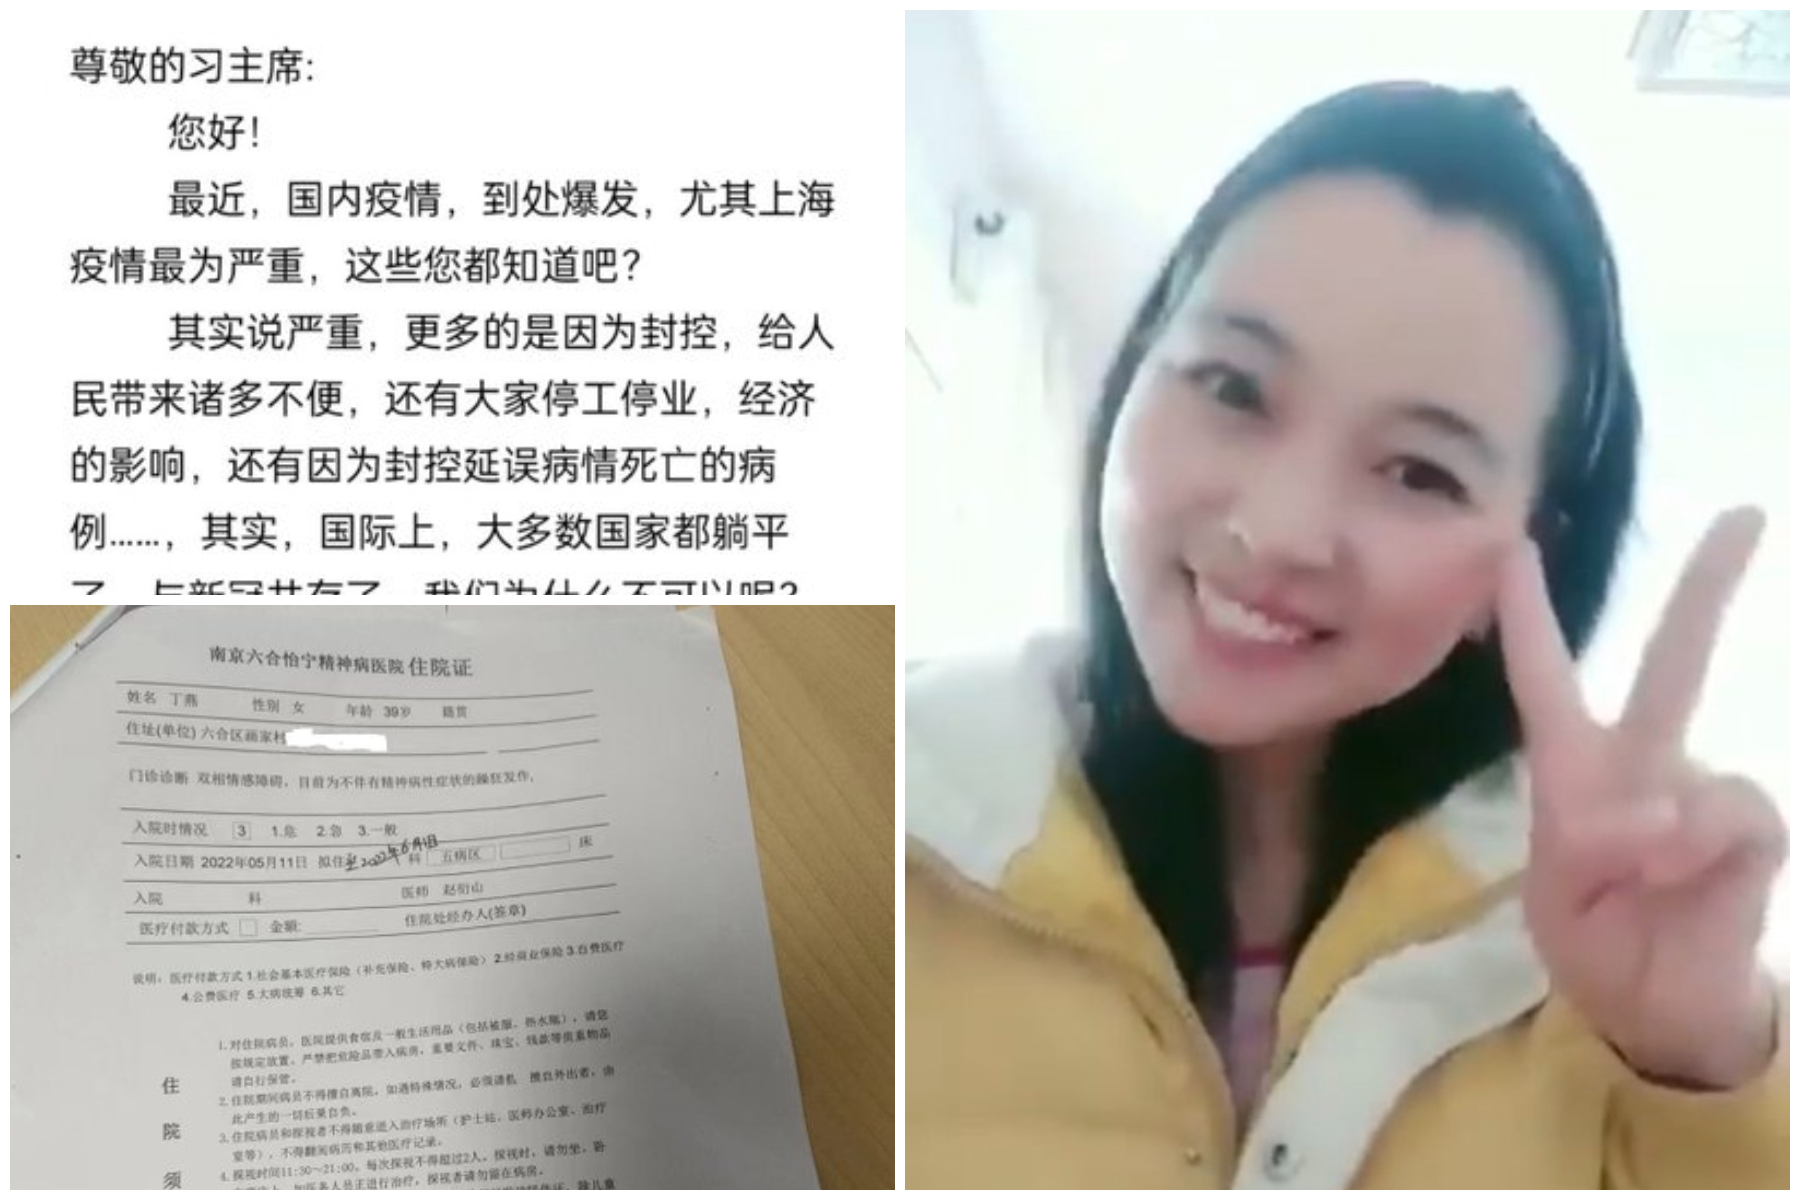 Re: [新聞] 南京女子批評當局防疫政策 被送精神病院